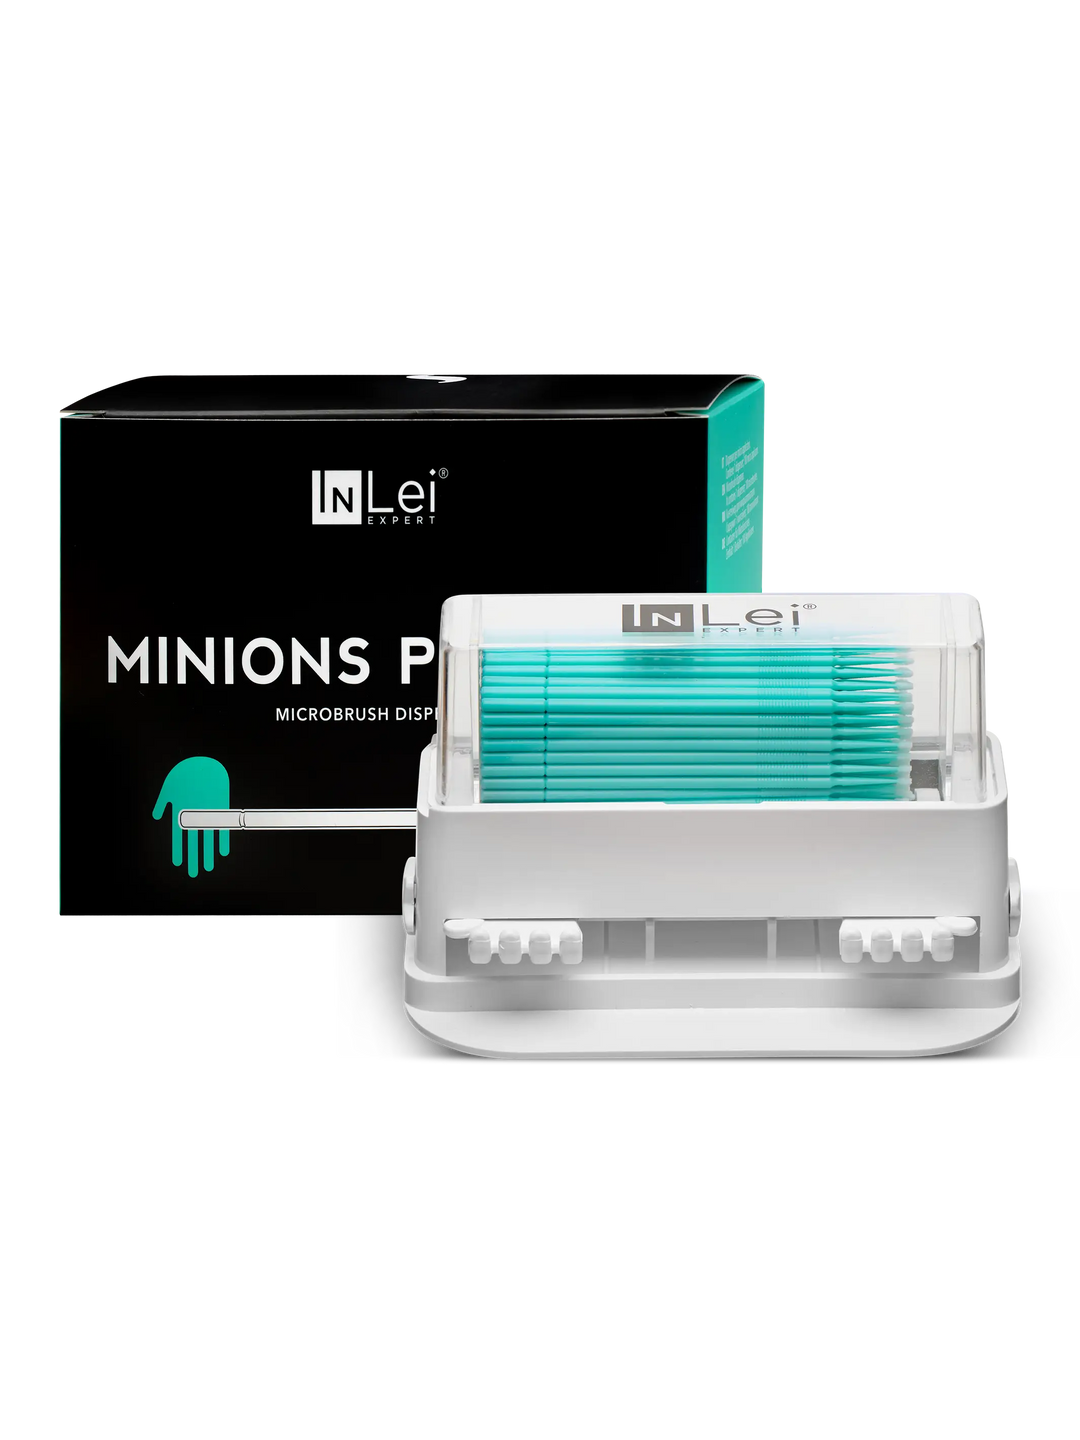 MINIONS PUSHER | dispenser for micro applicators